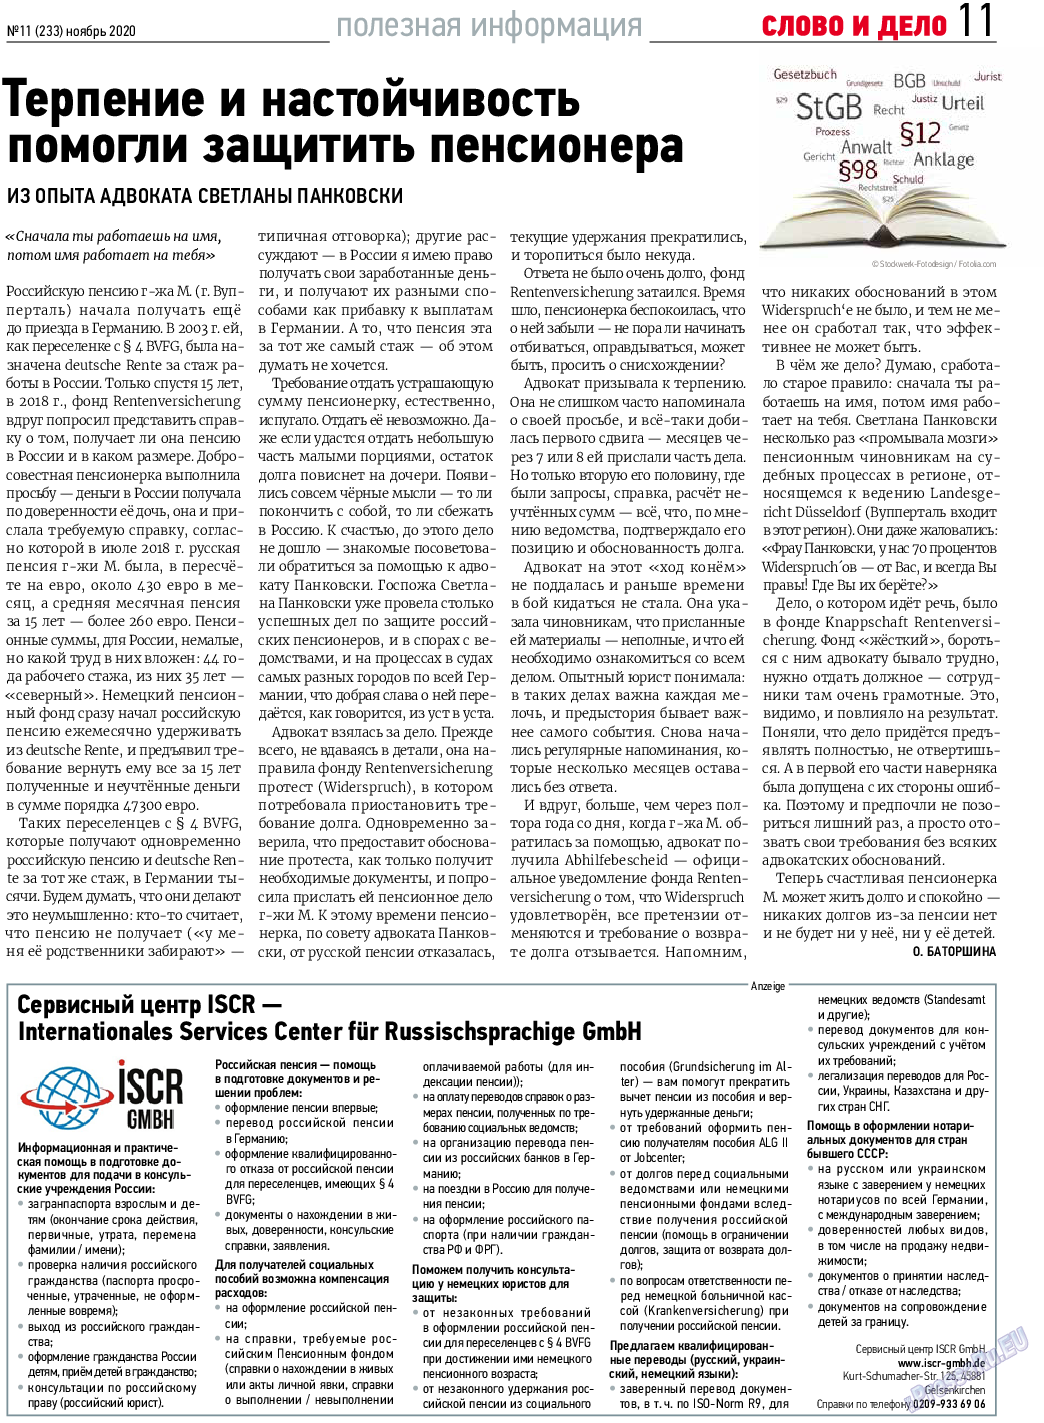 Телеграф NRW, газета. 2020 №11 стр.11